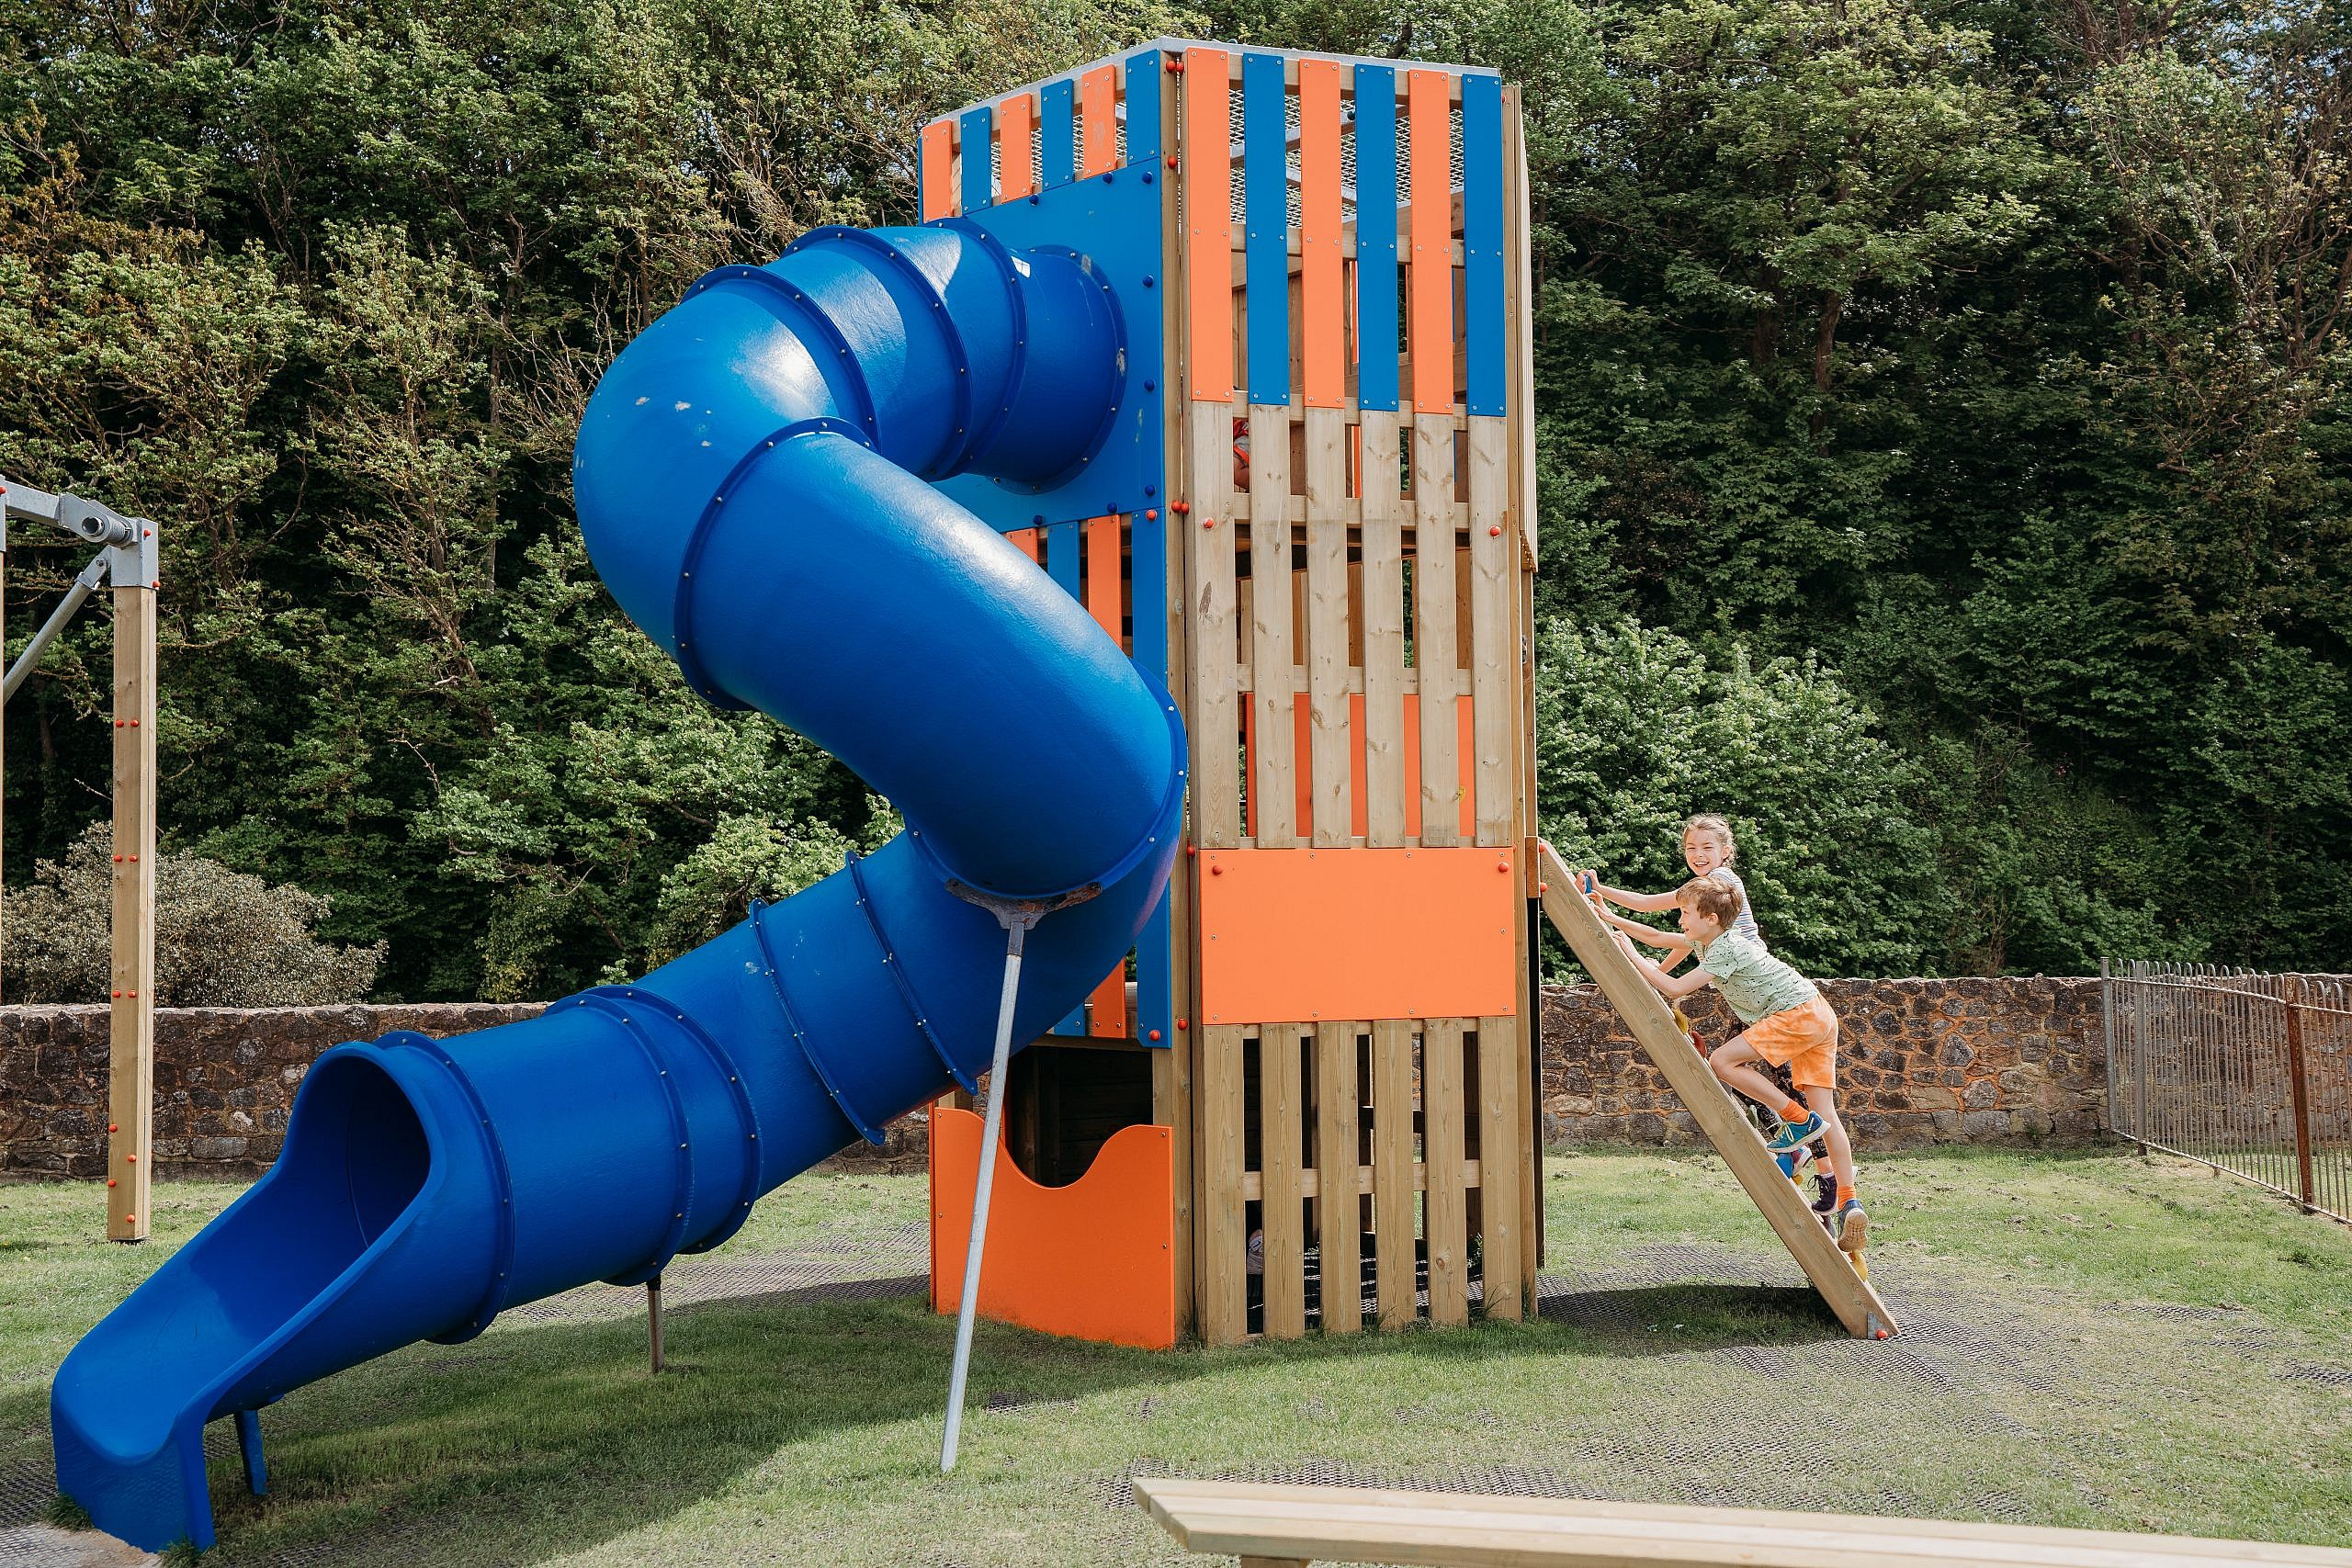 3m high Spiral Slide & tower with children climbing up the climbing wall.